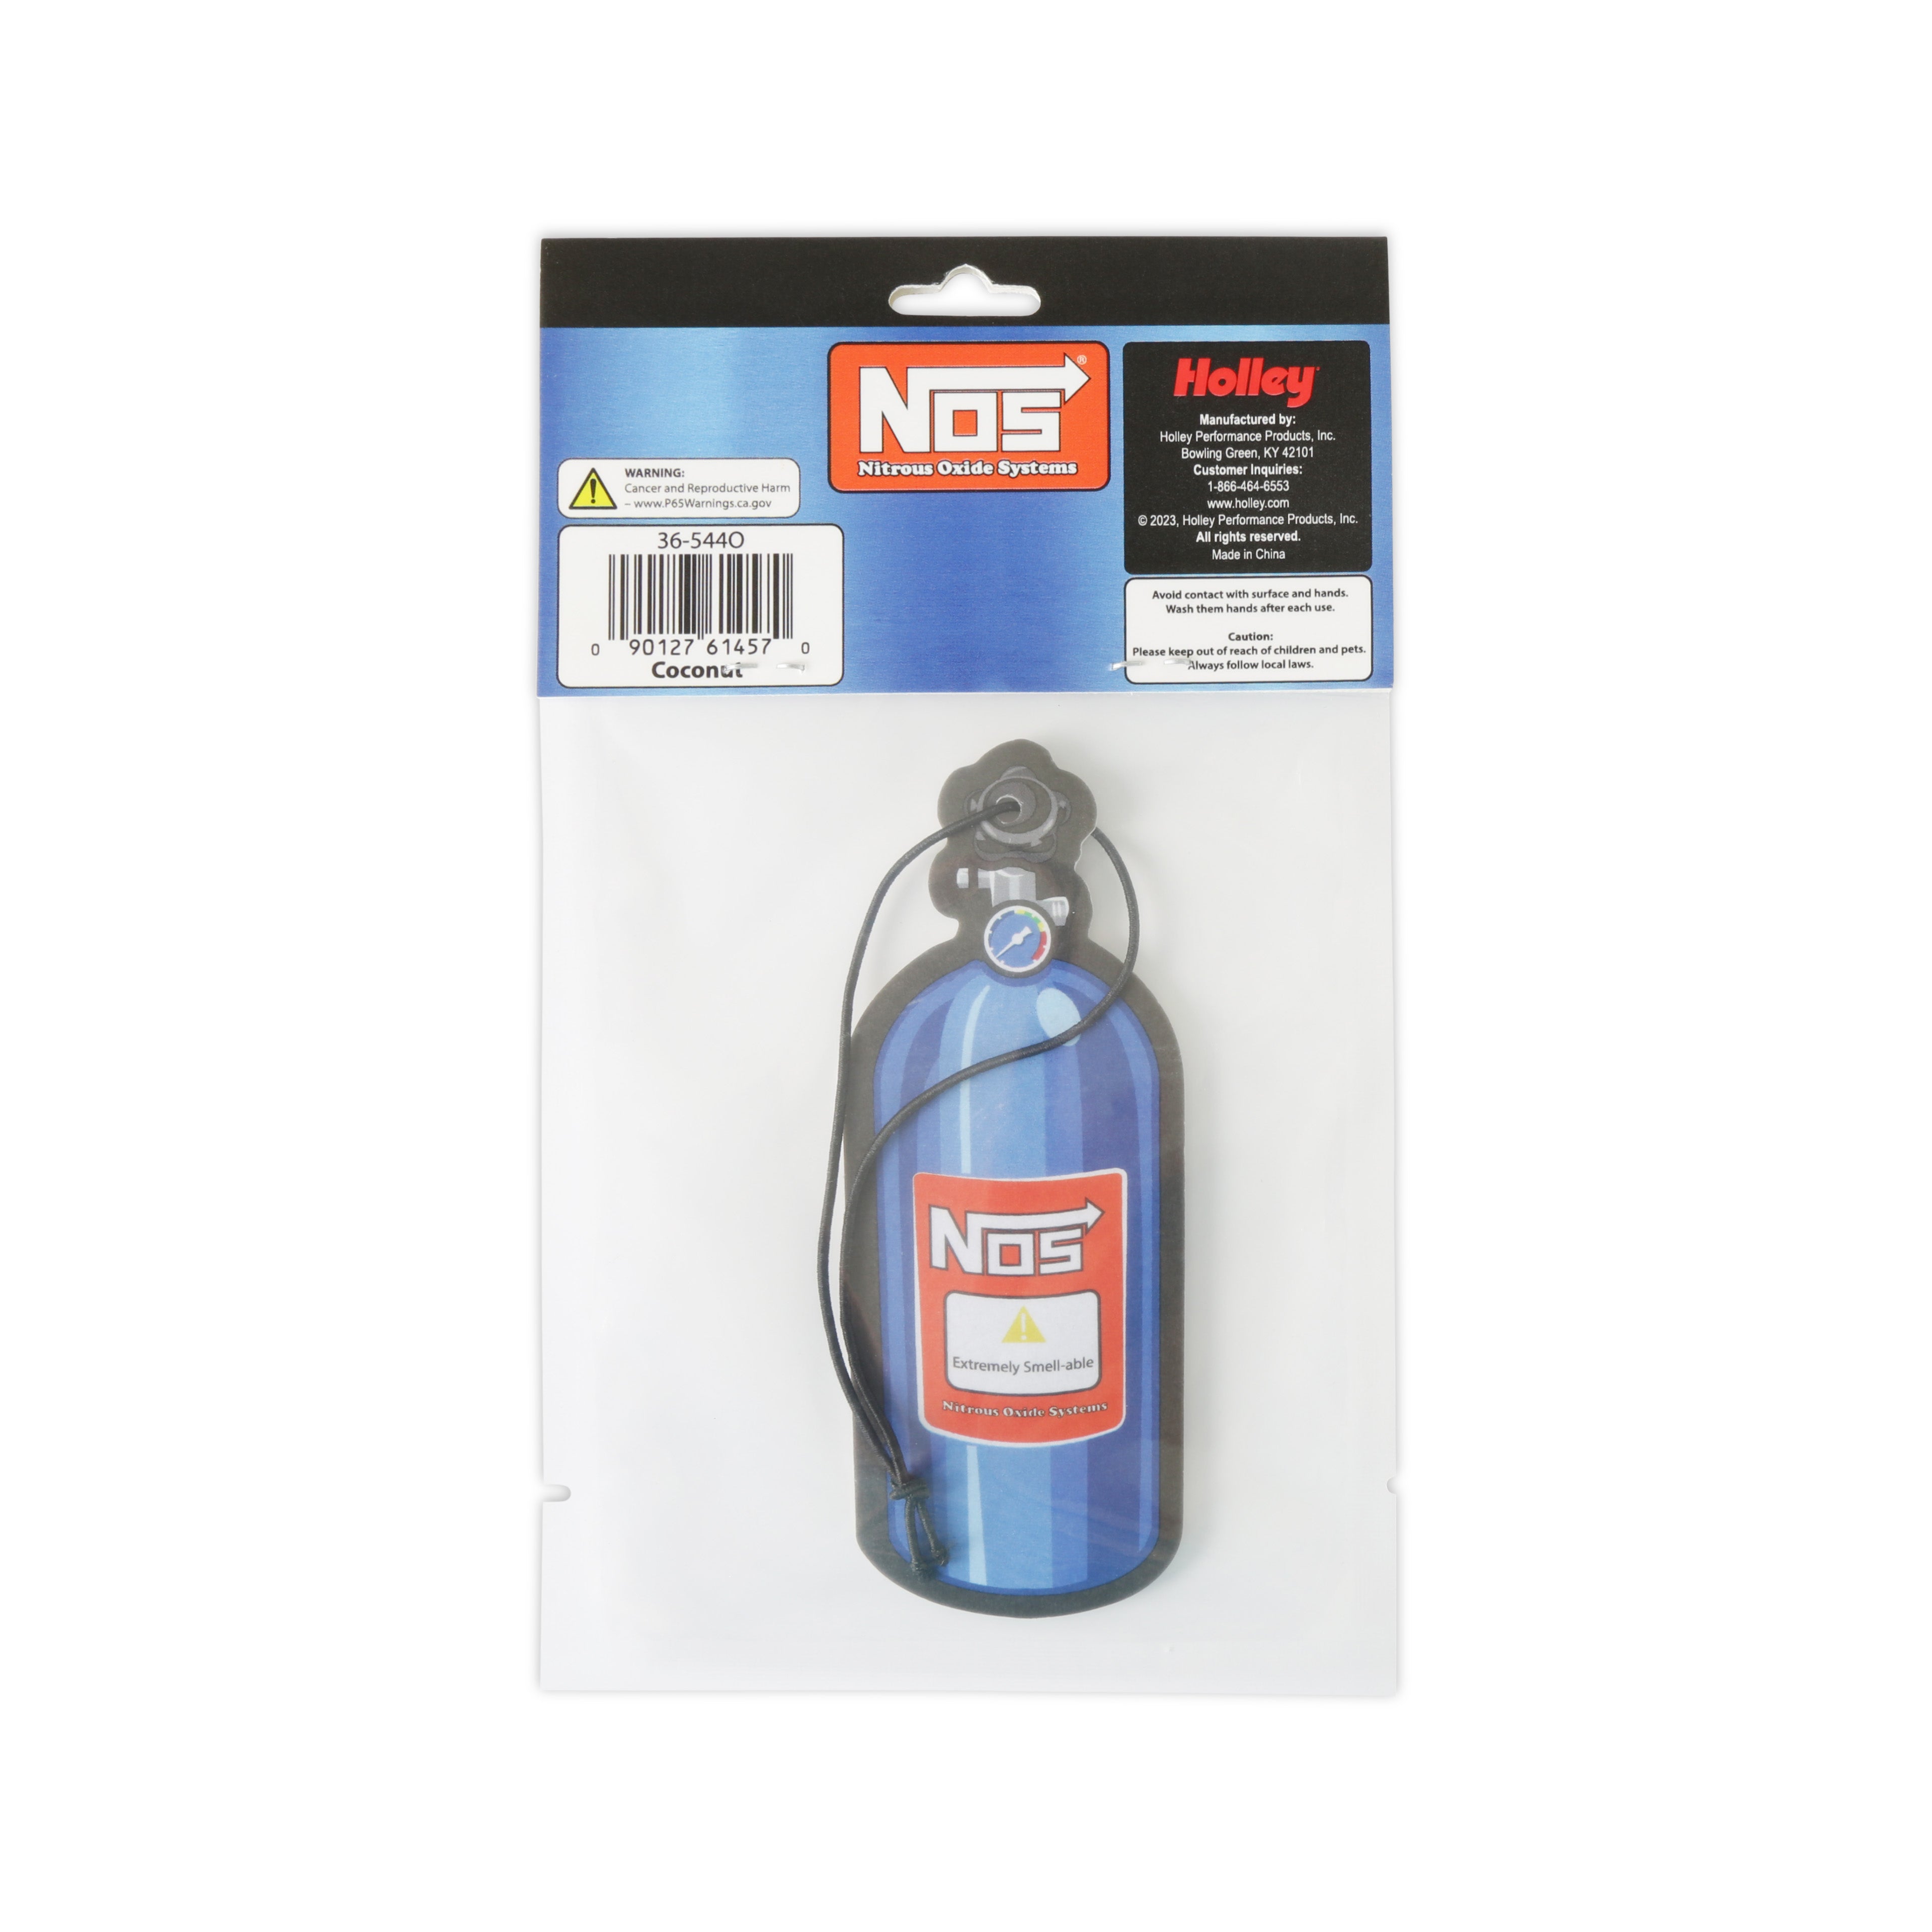 NOS/Nitrous Oxide System Air Freshener 36-544O